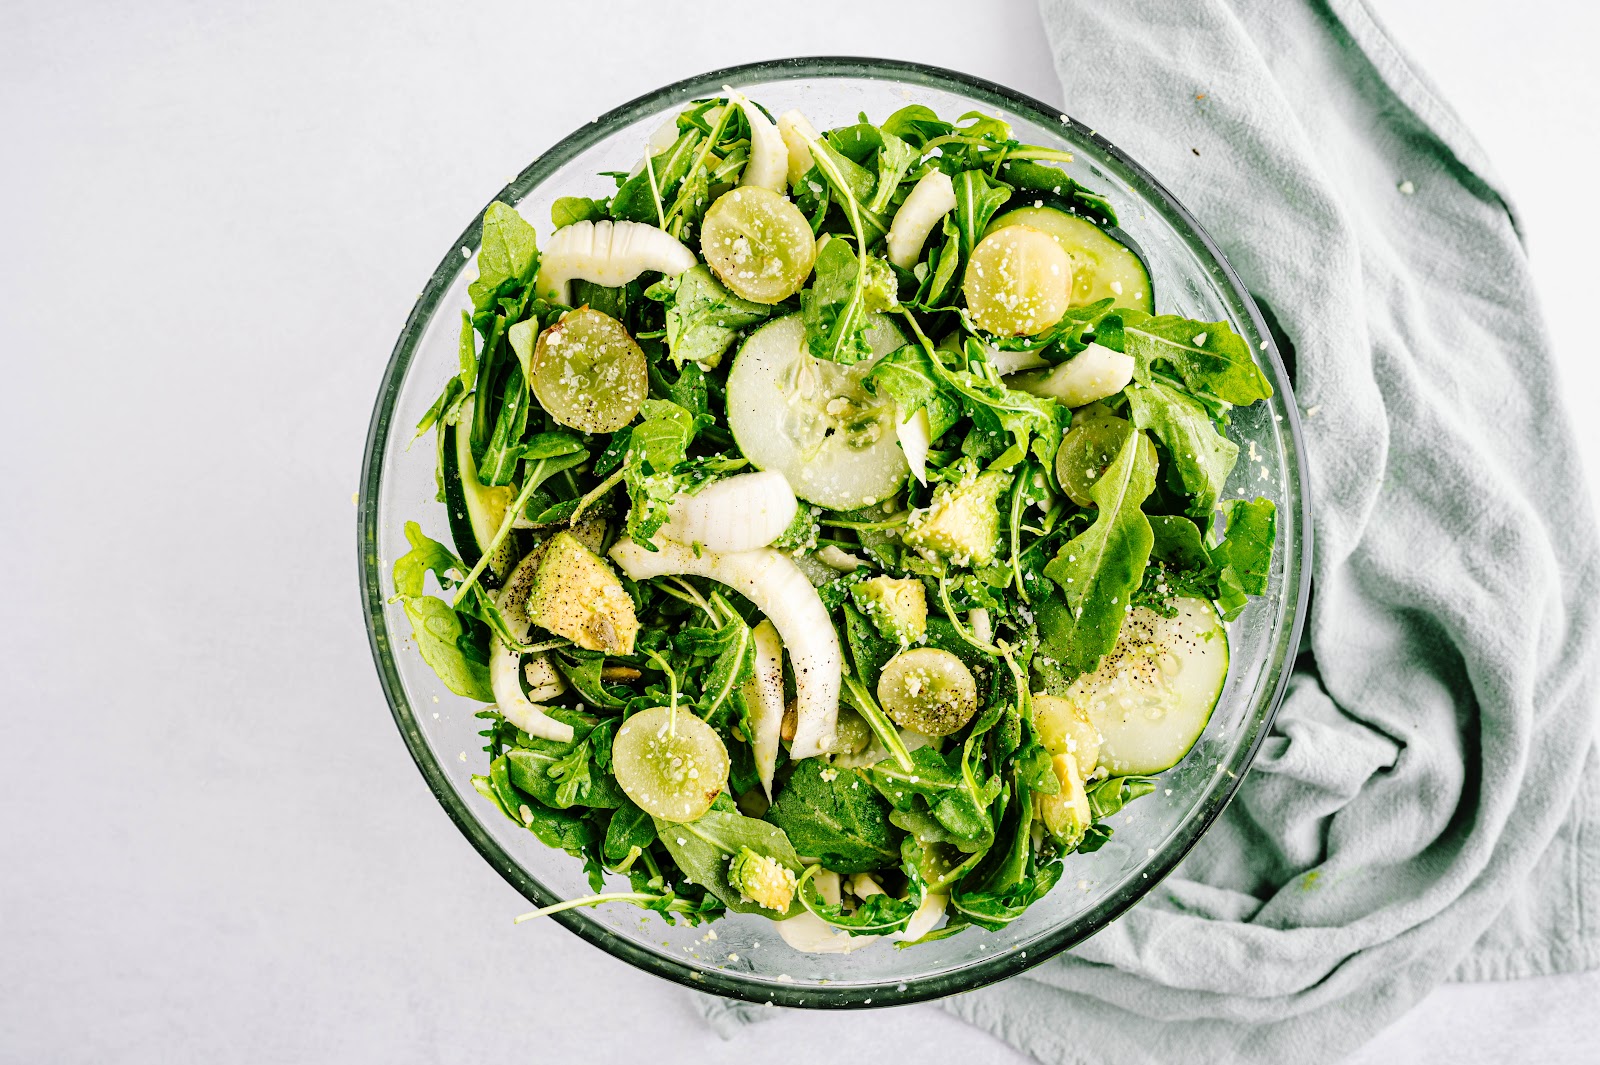 Drizzle lemon vinaigrette on your green salad and toss.